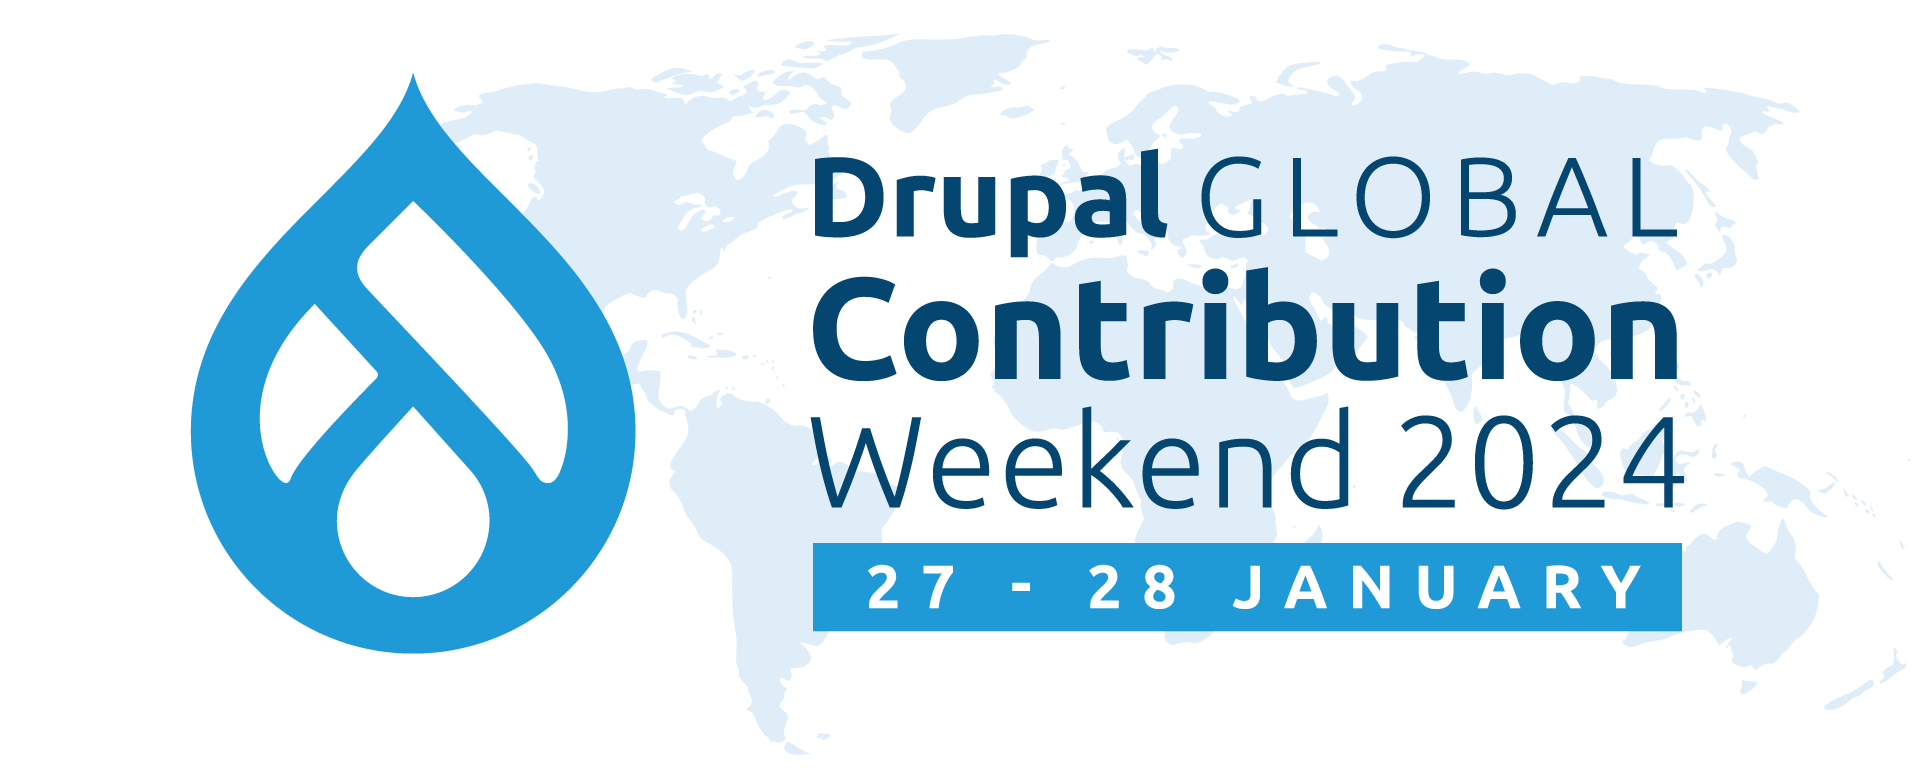 Drupal signet, Drupal Global Sprint Weekend 2023, date in byline, white background with world map